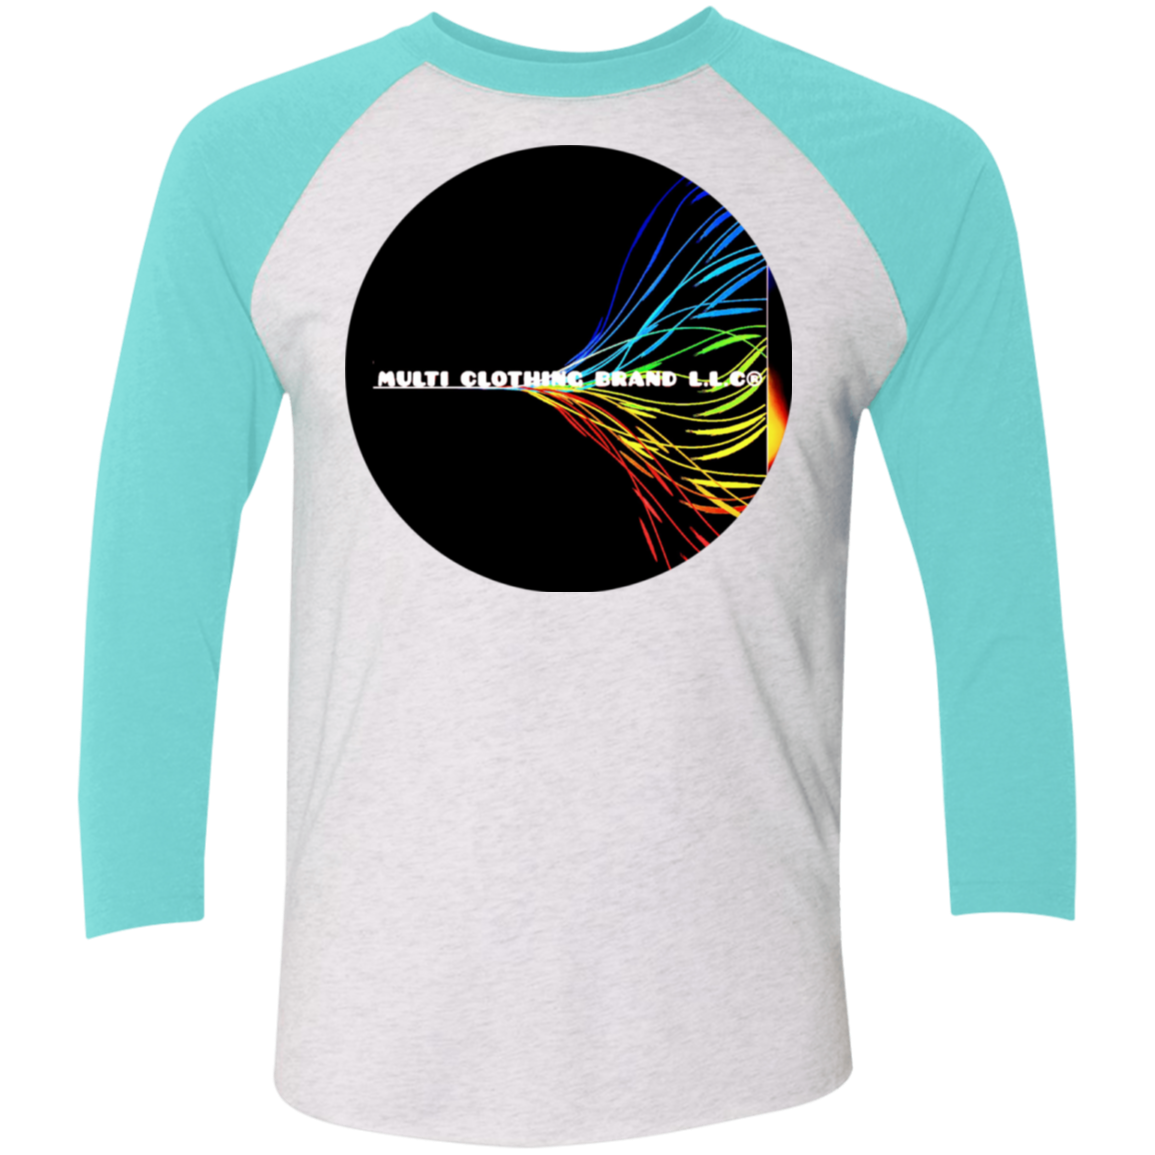 Multi Clothing Brand L.L.C - True Colors - Men's Tri-Blend 3/4 Sleeve Raglan T-Shirt CustomCat